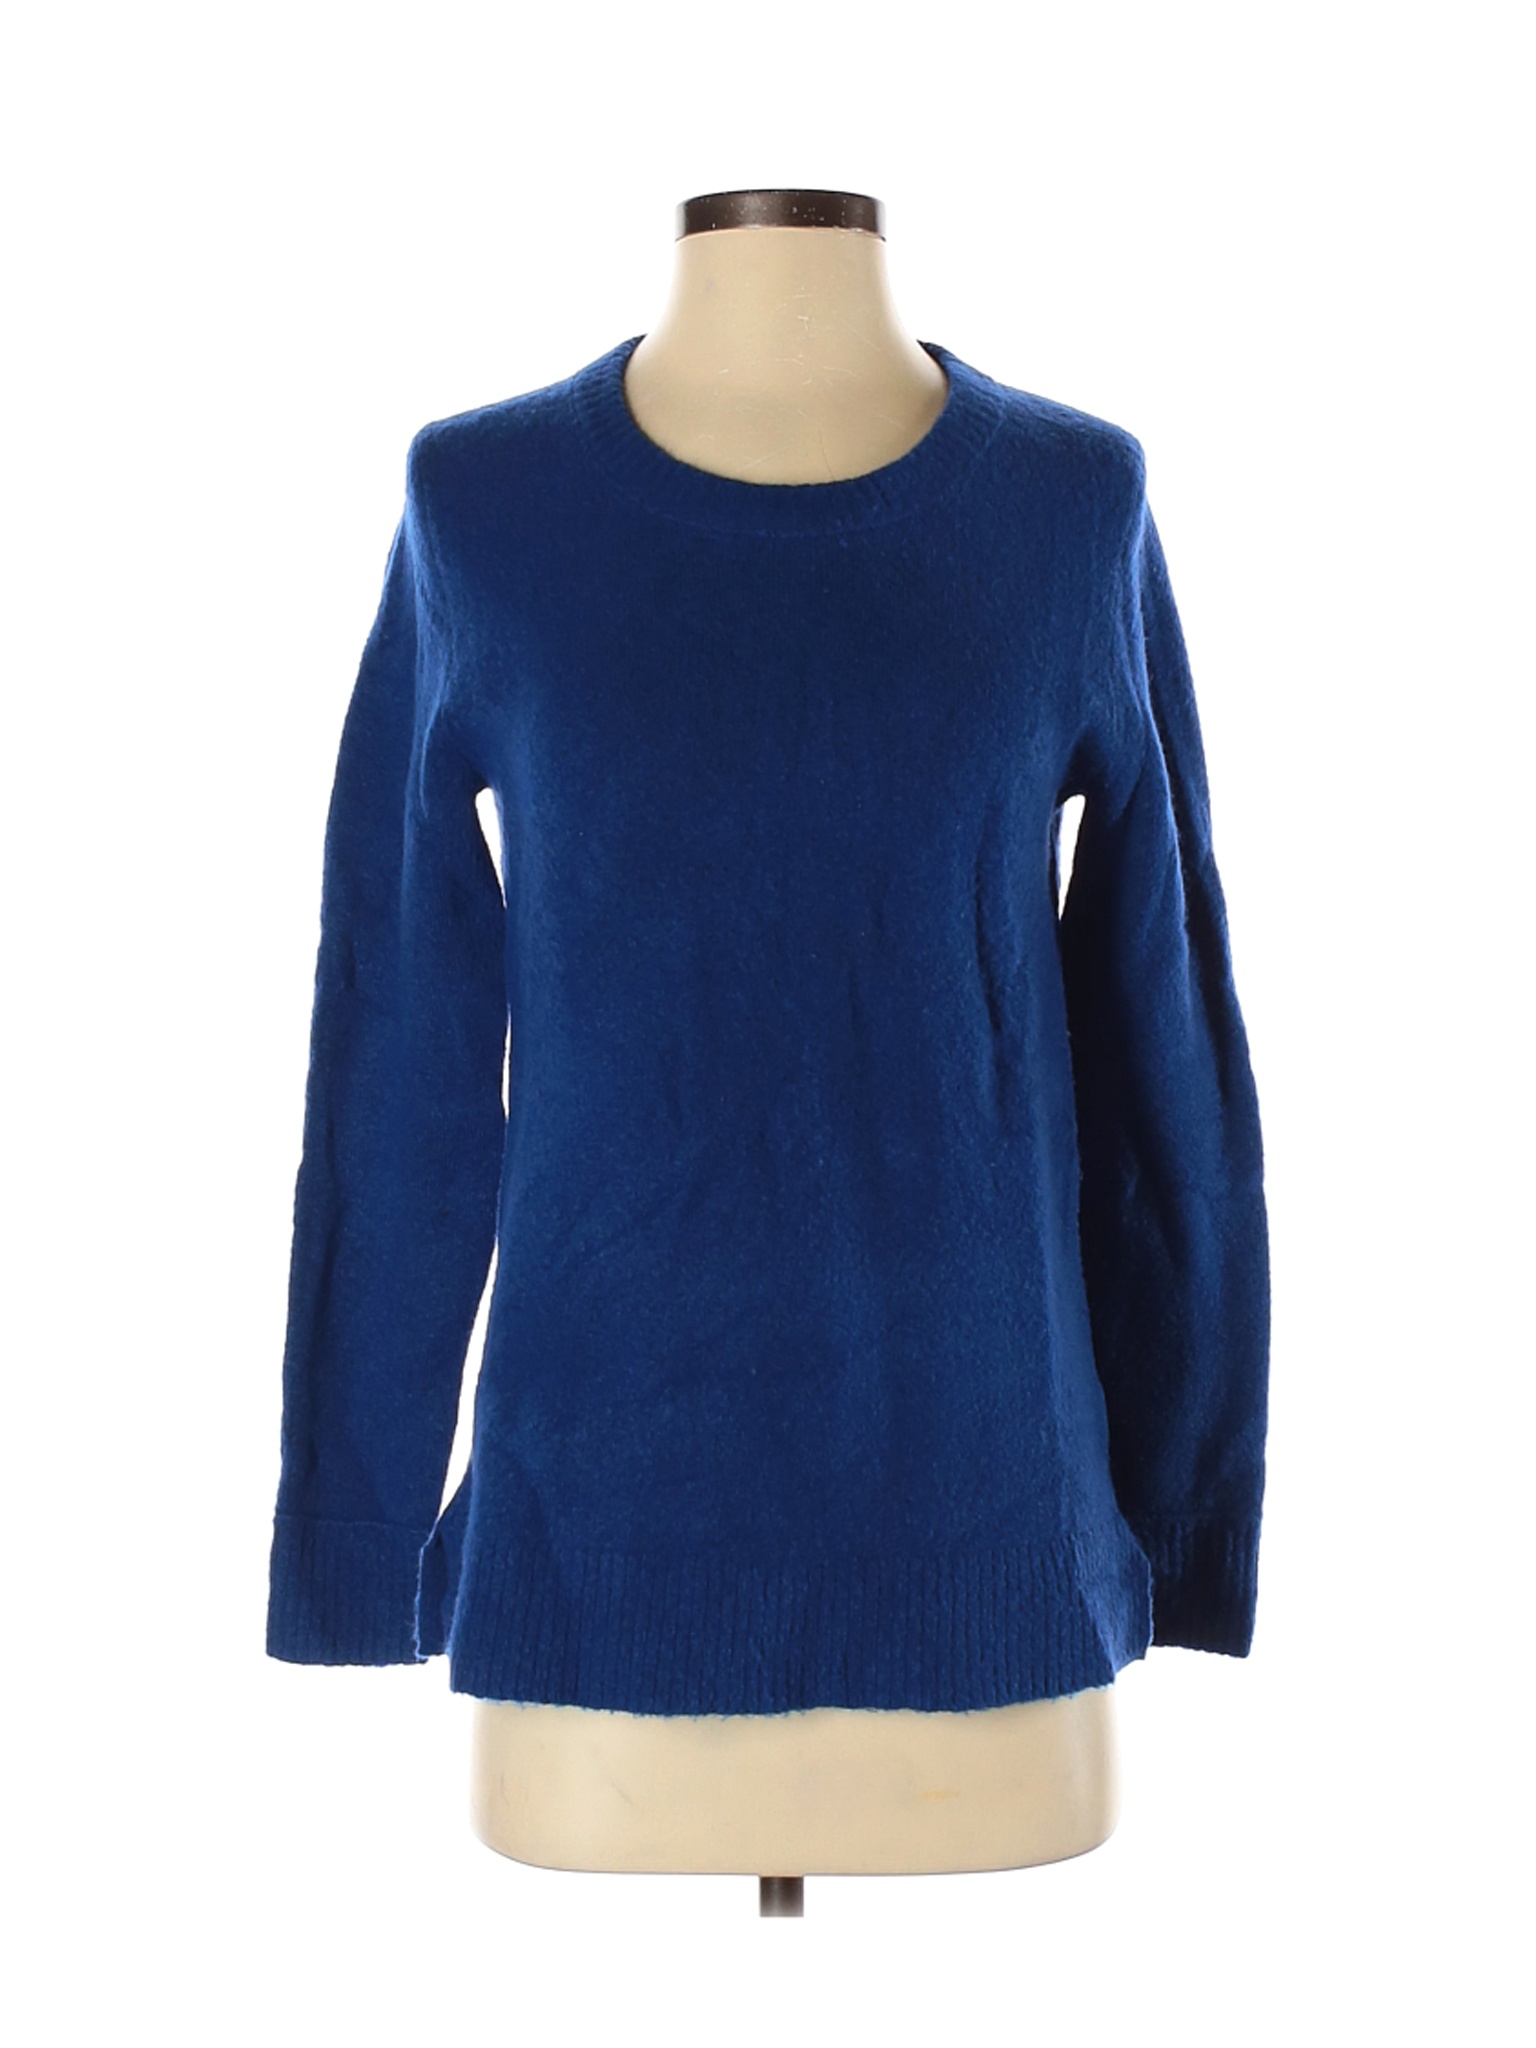 J.Crew Factory Store Women Blue Pullover Sweater XS | eBay